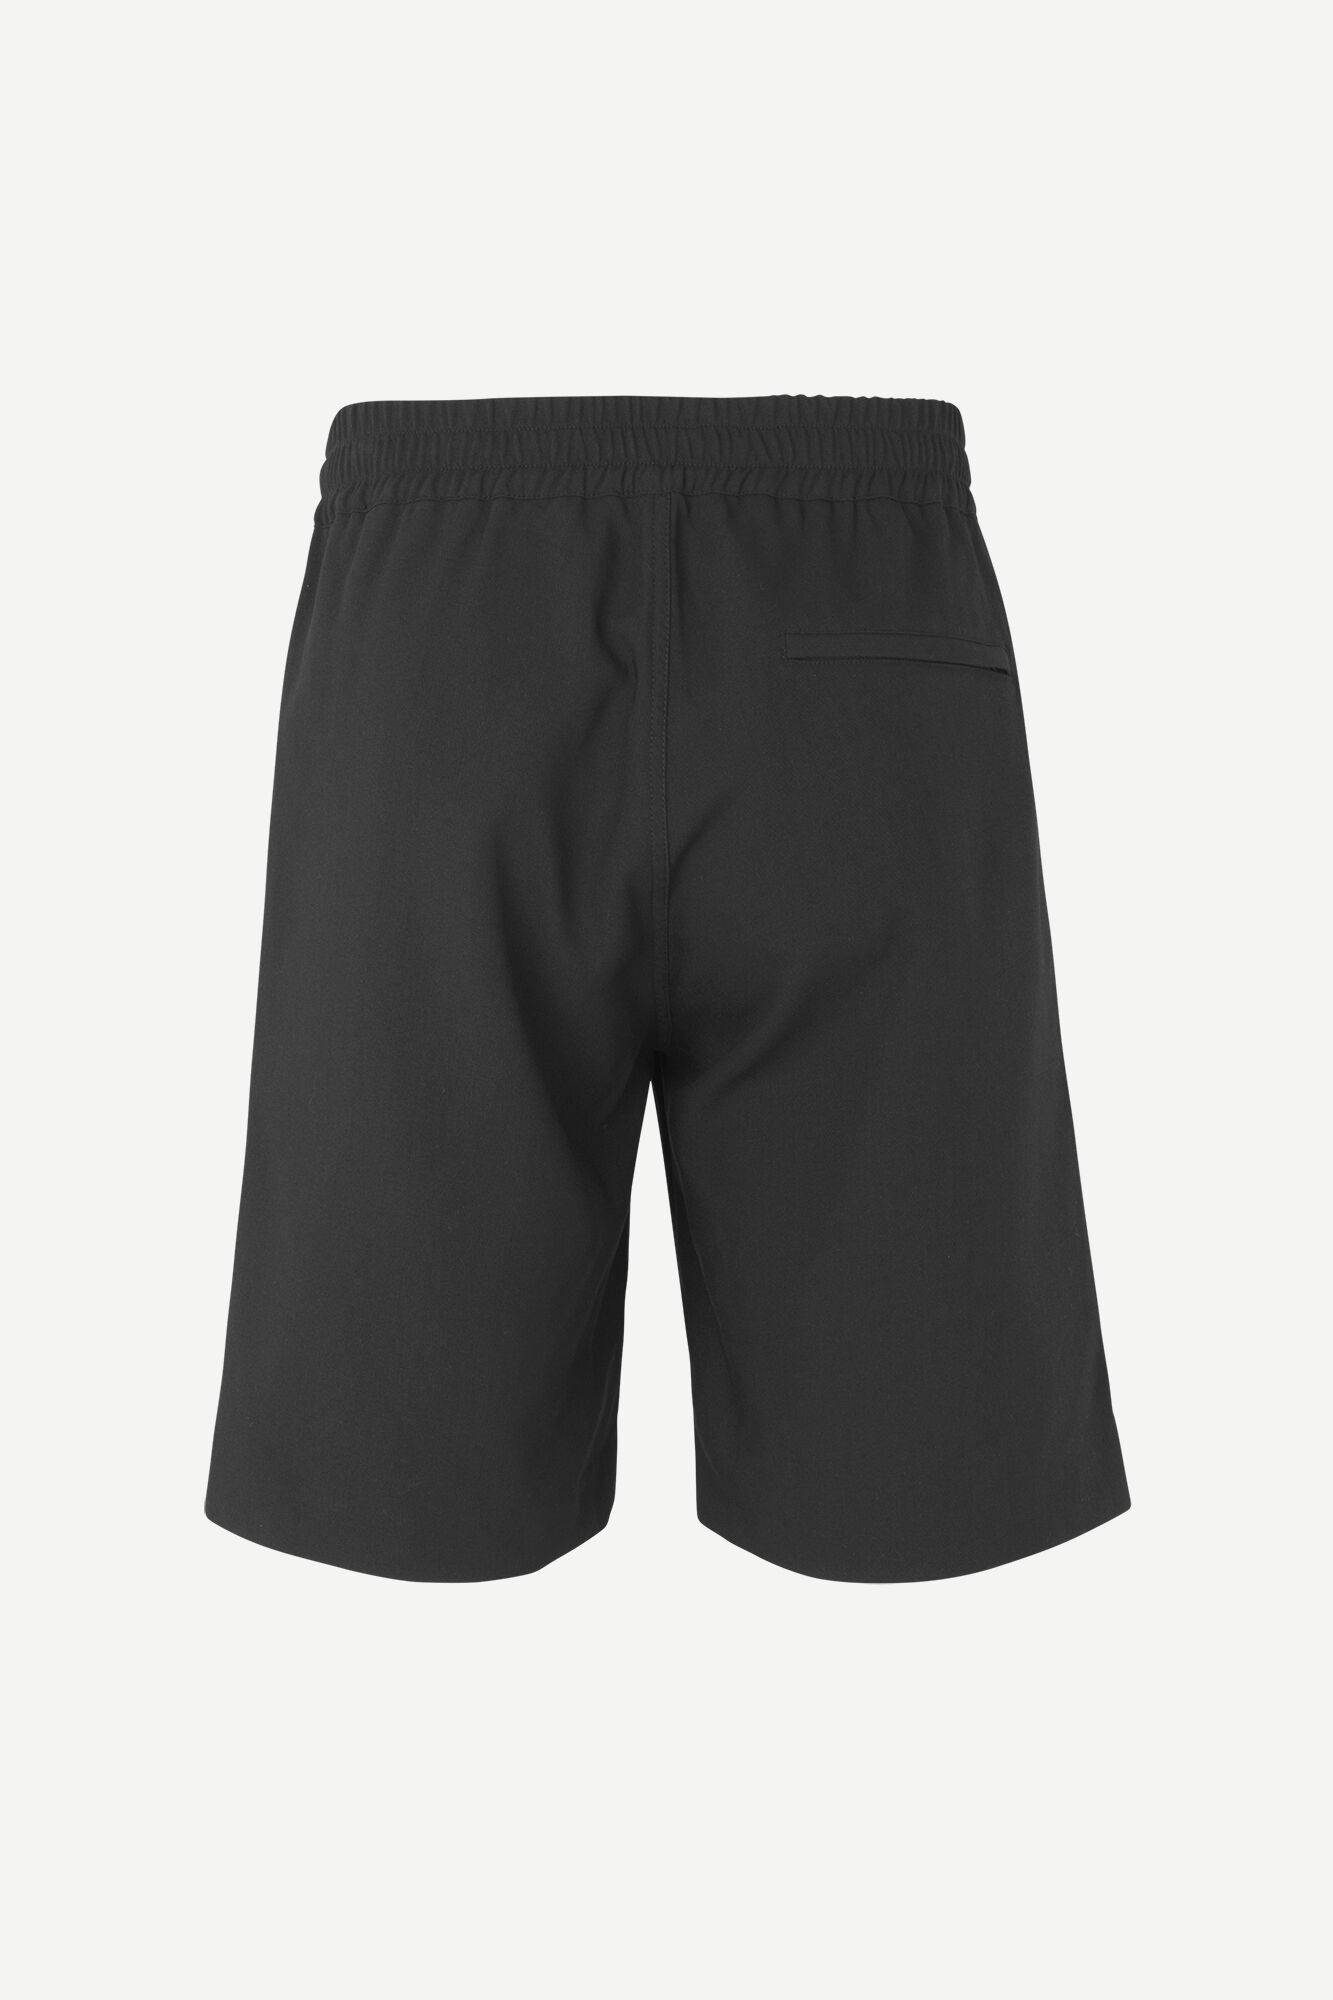 Samsøe & Samsøe Smith shorts, black, medium